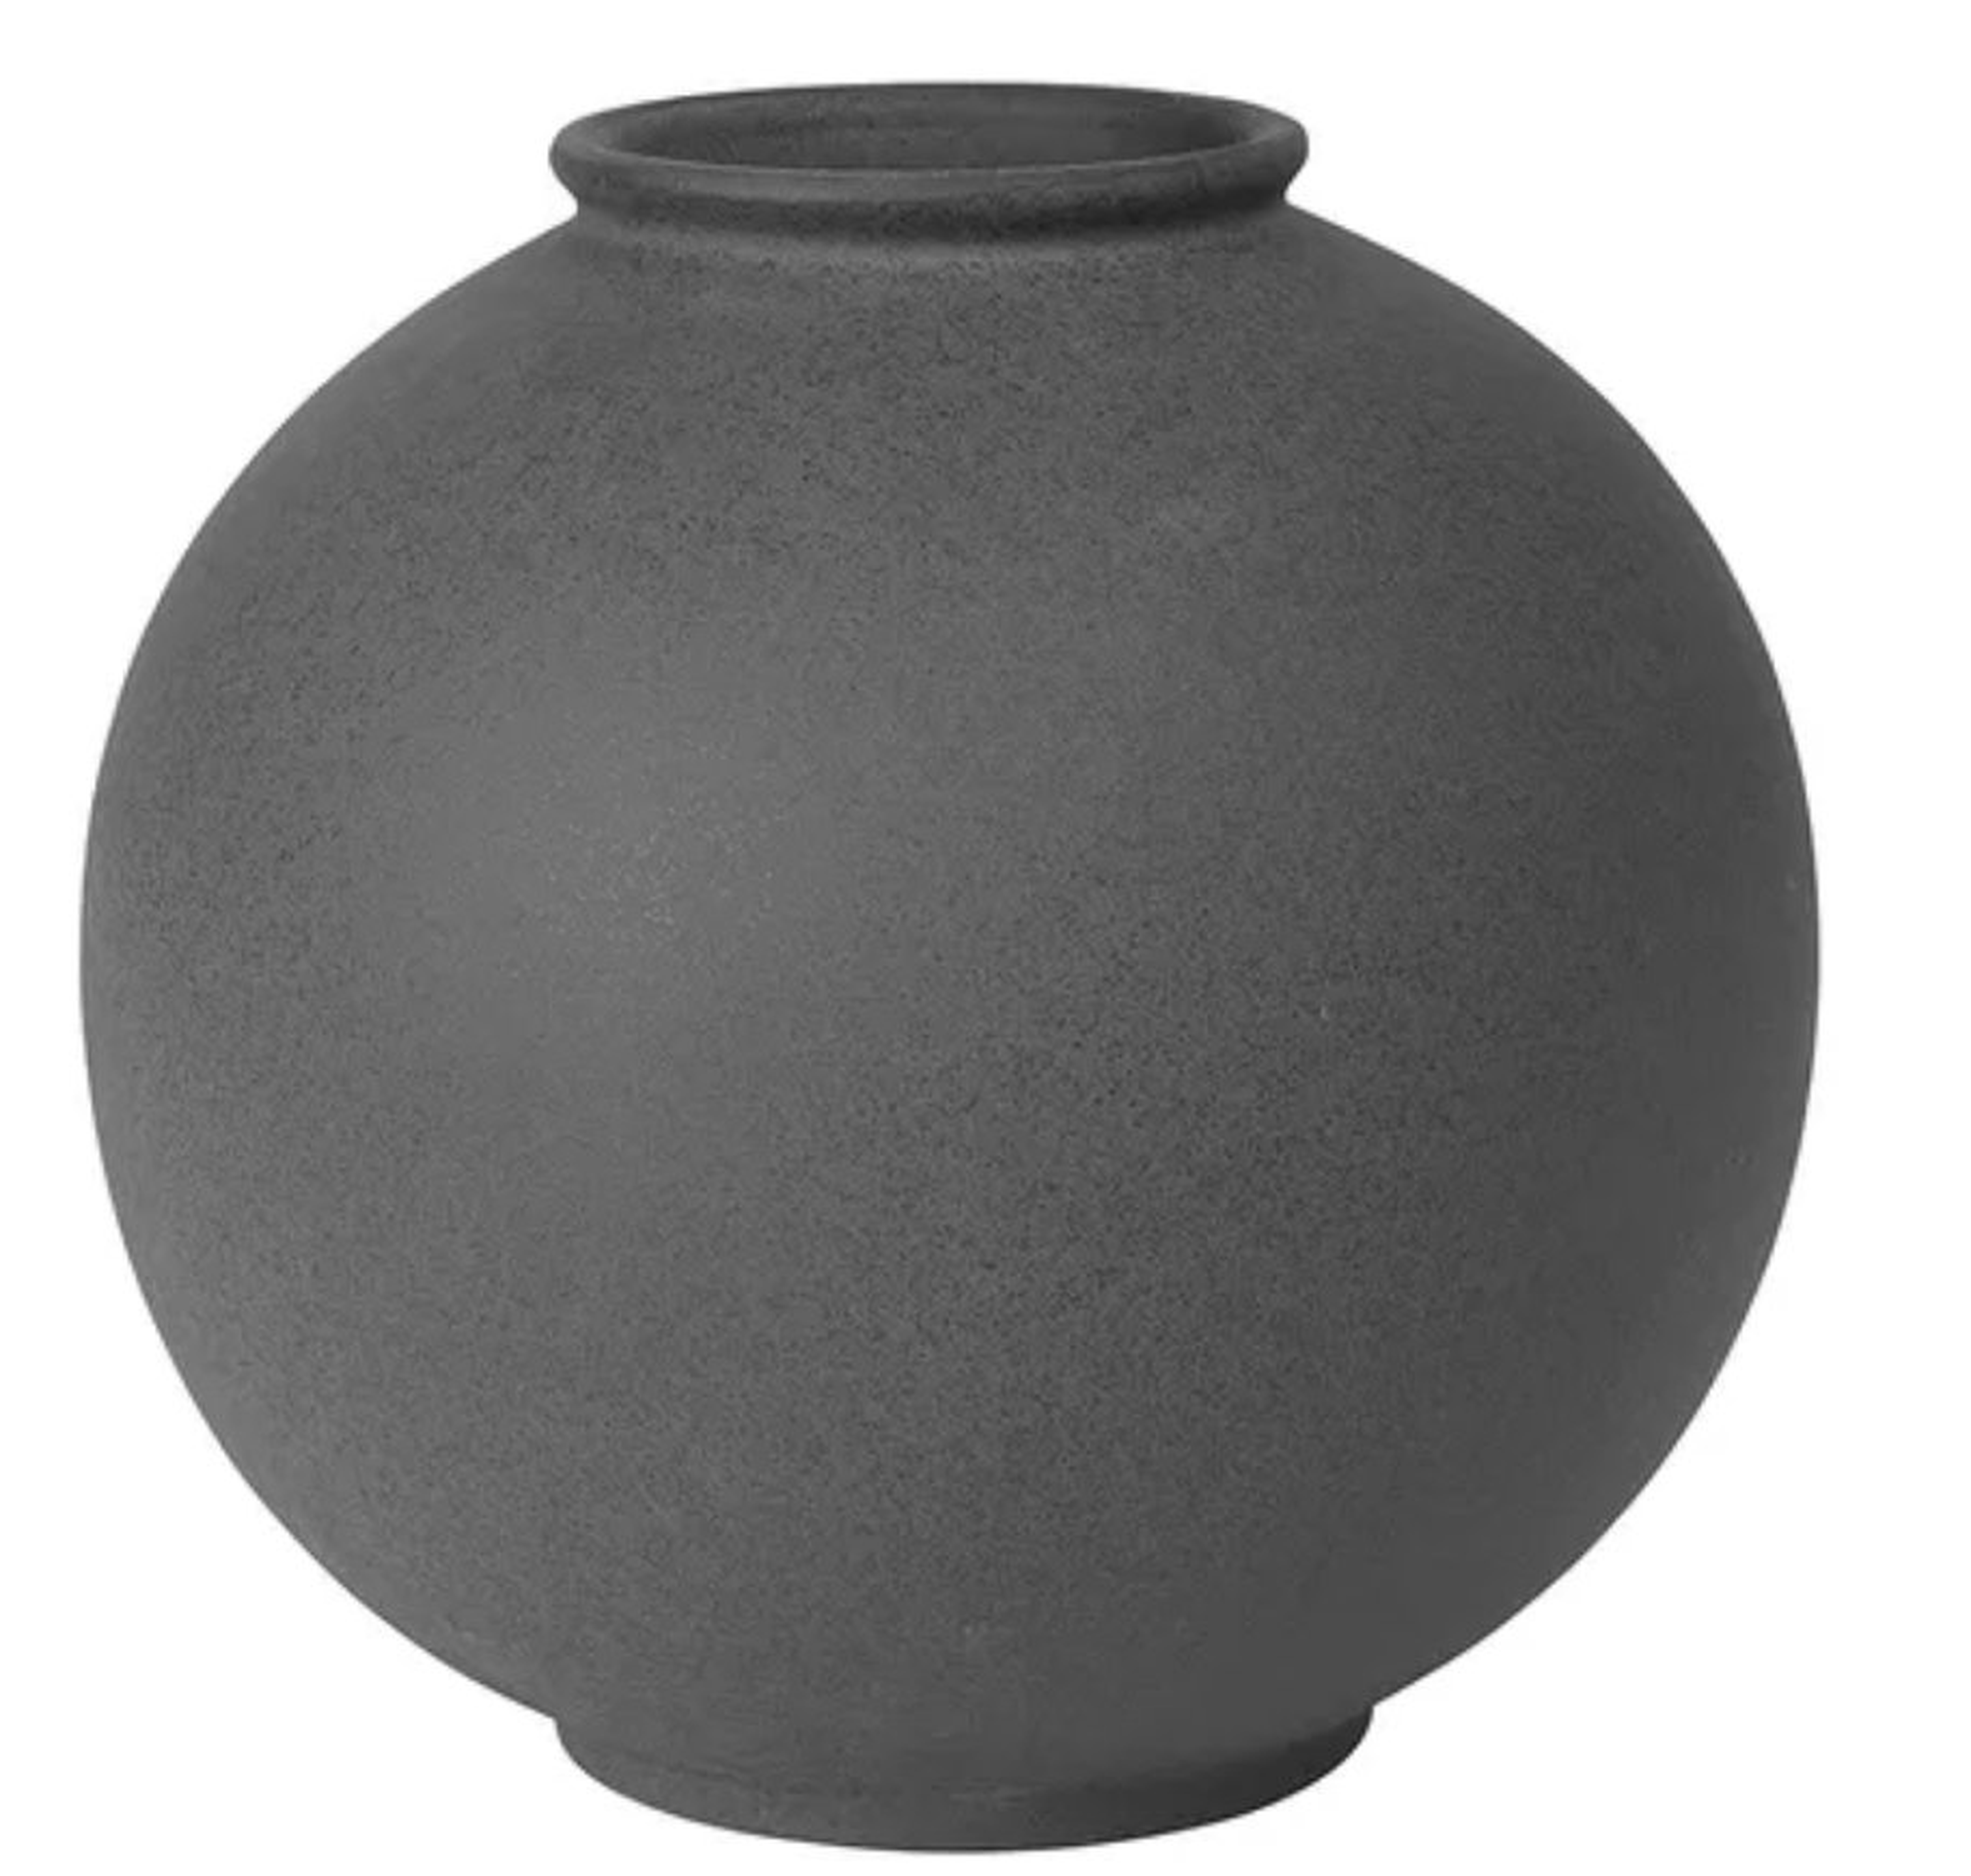 Rudea Table Vase - Wayfair